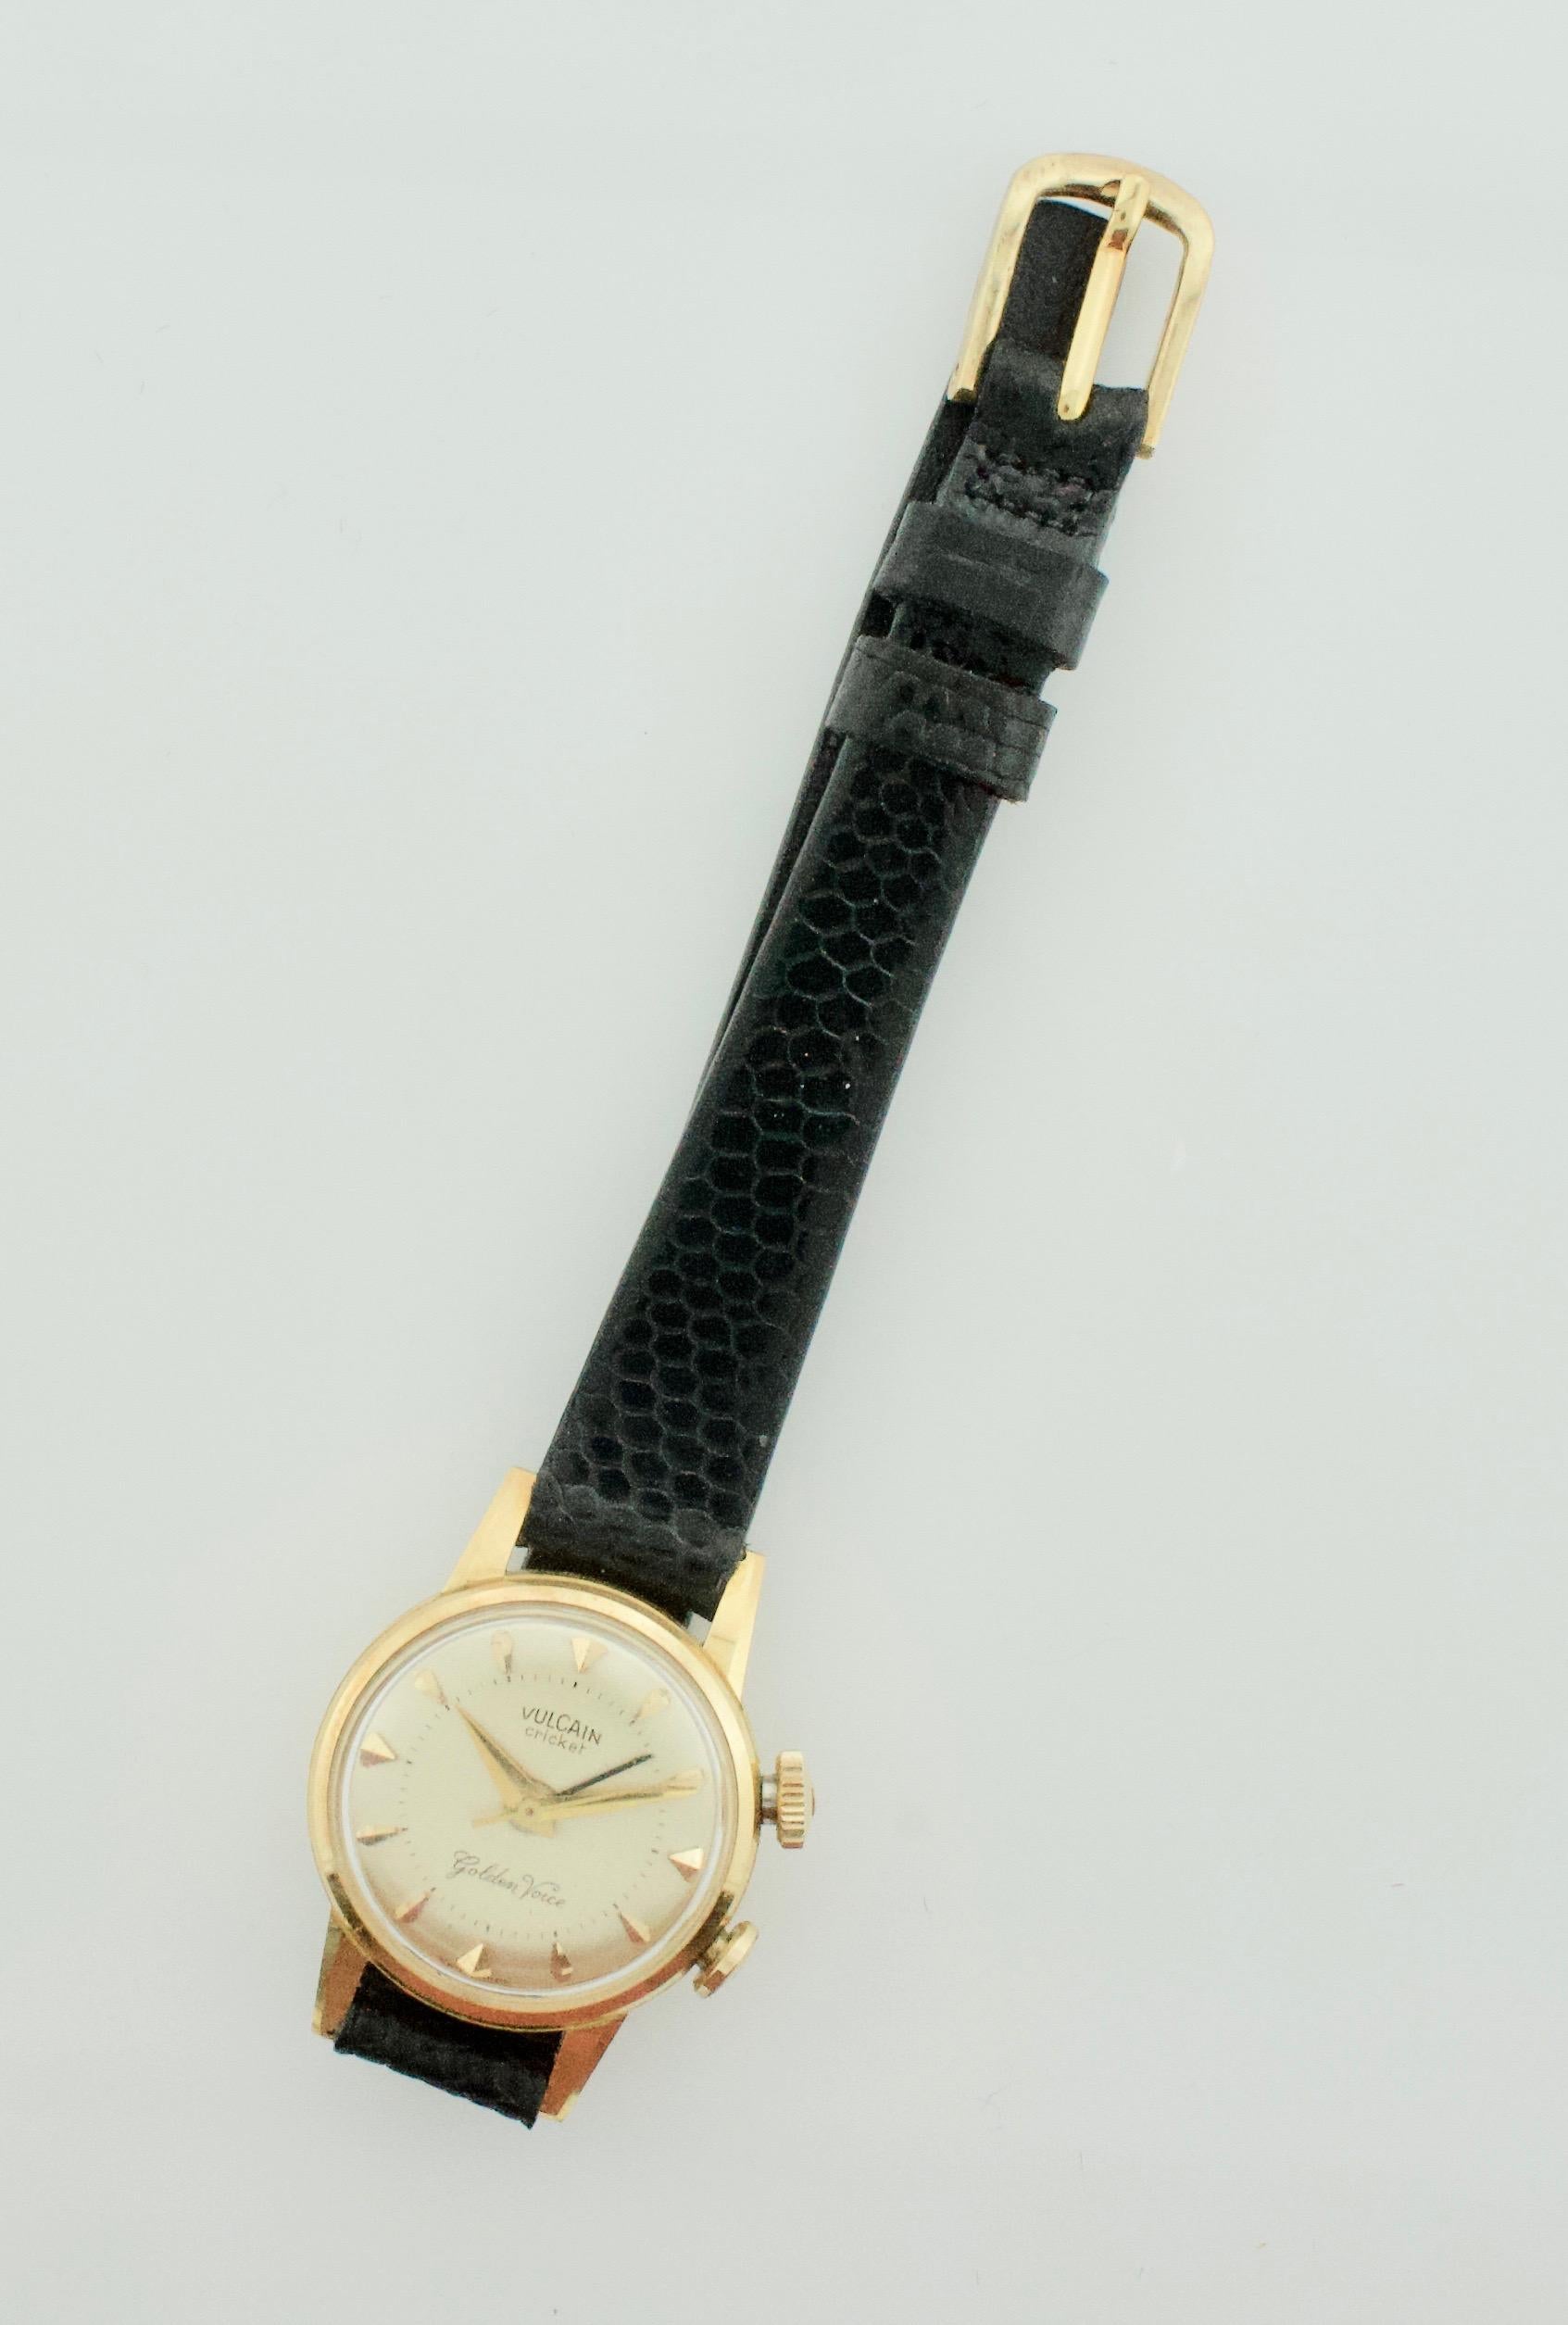 18k Vulcain Alarm Watch, Circa 1950's In Good Condition For Sale In Wailea, HI